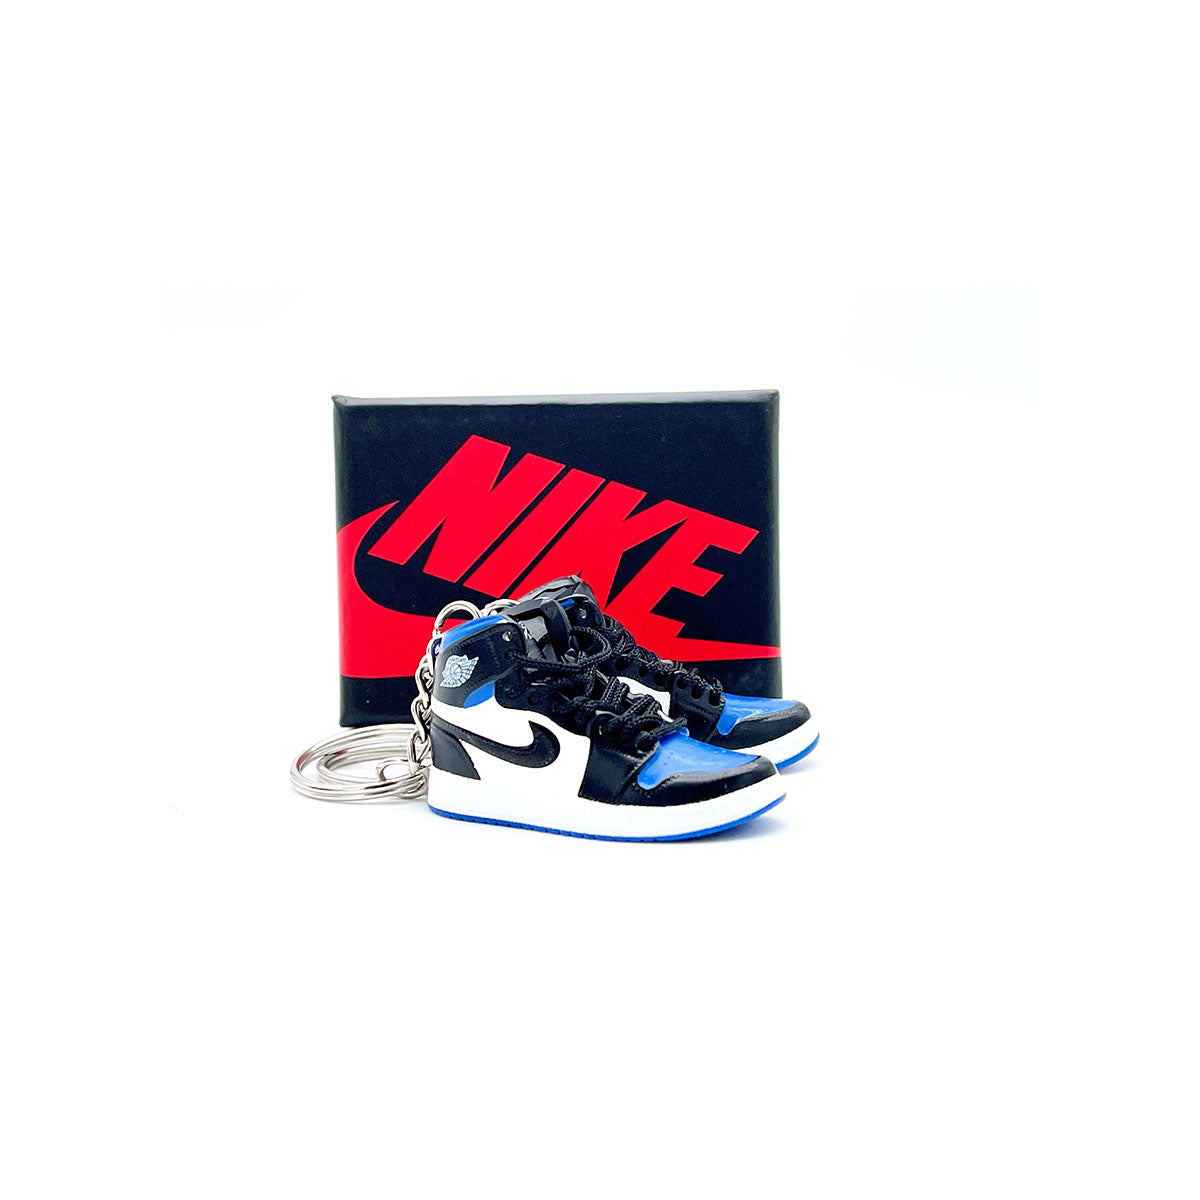 3D Sneaker Keychain- Air Jordan 1 High Royal Toe Pair